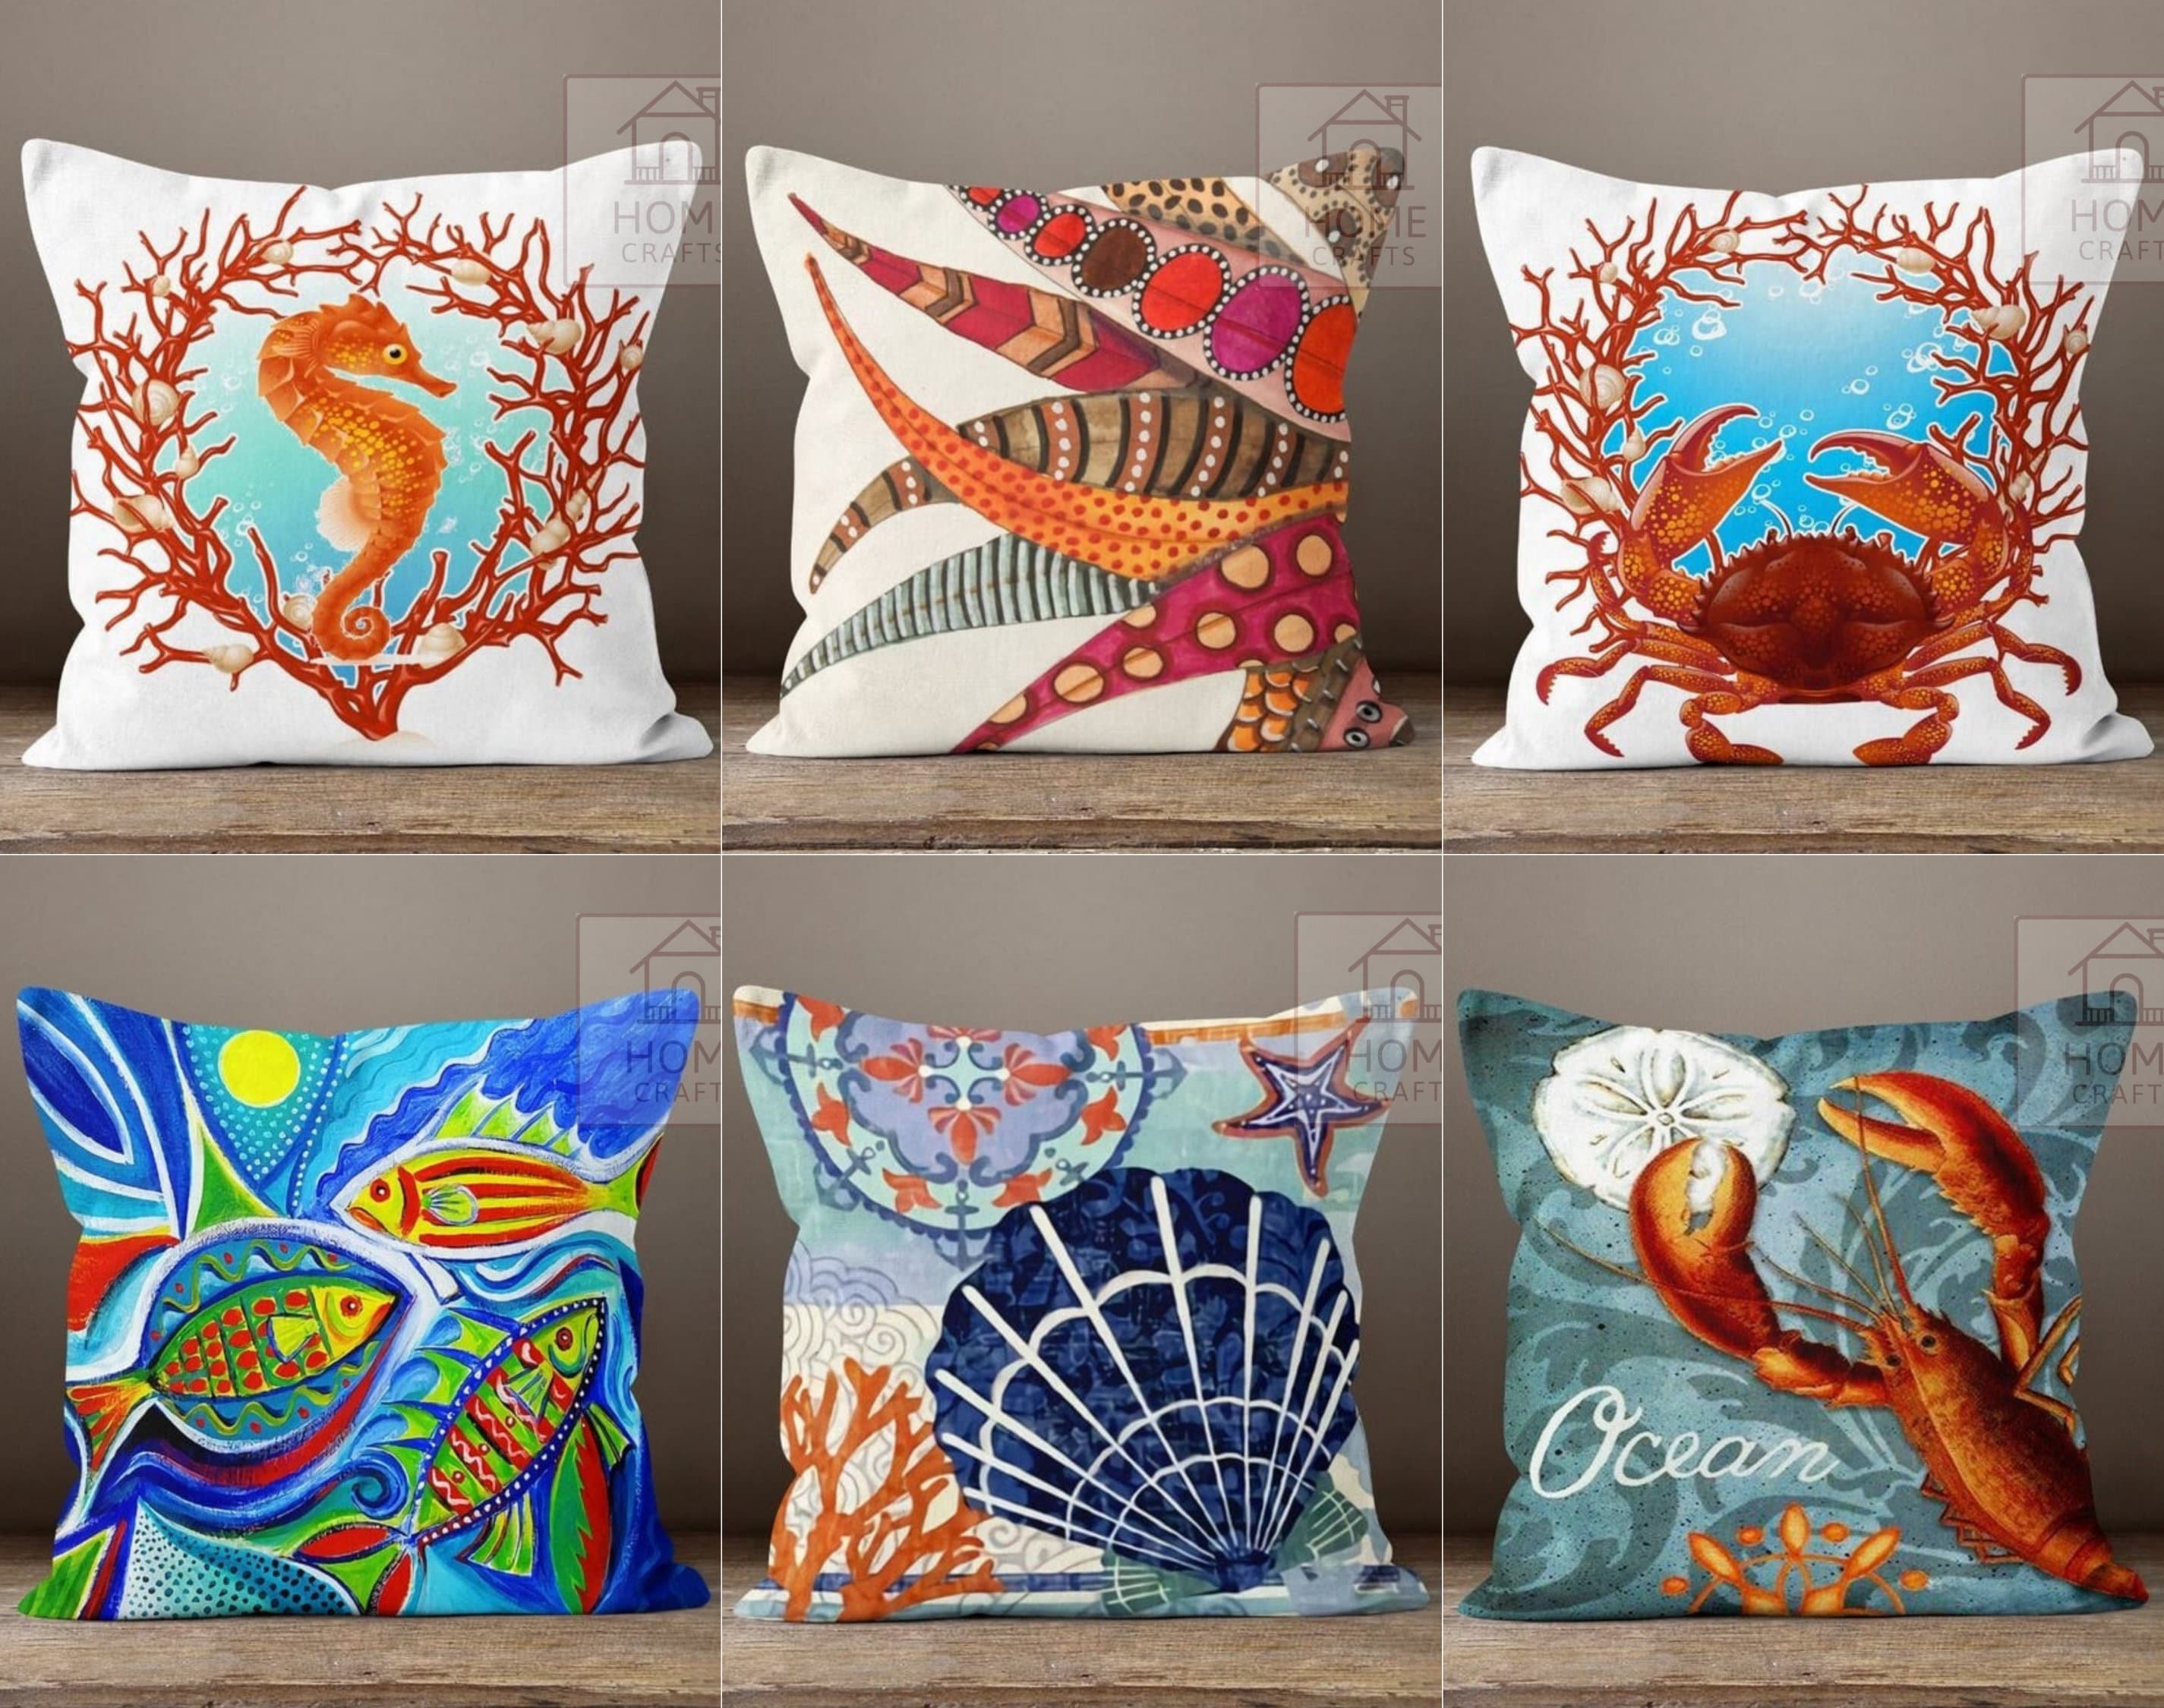 Coastal Sketch Shells Outdoor Decorative Pillow - Laural Home